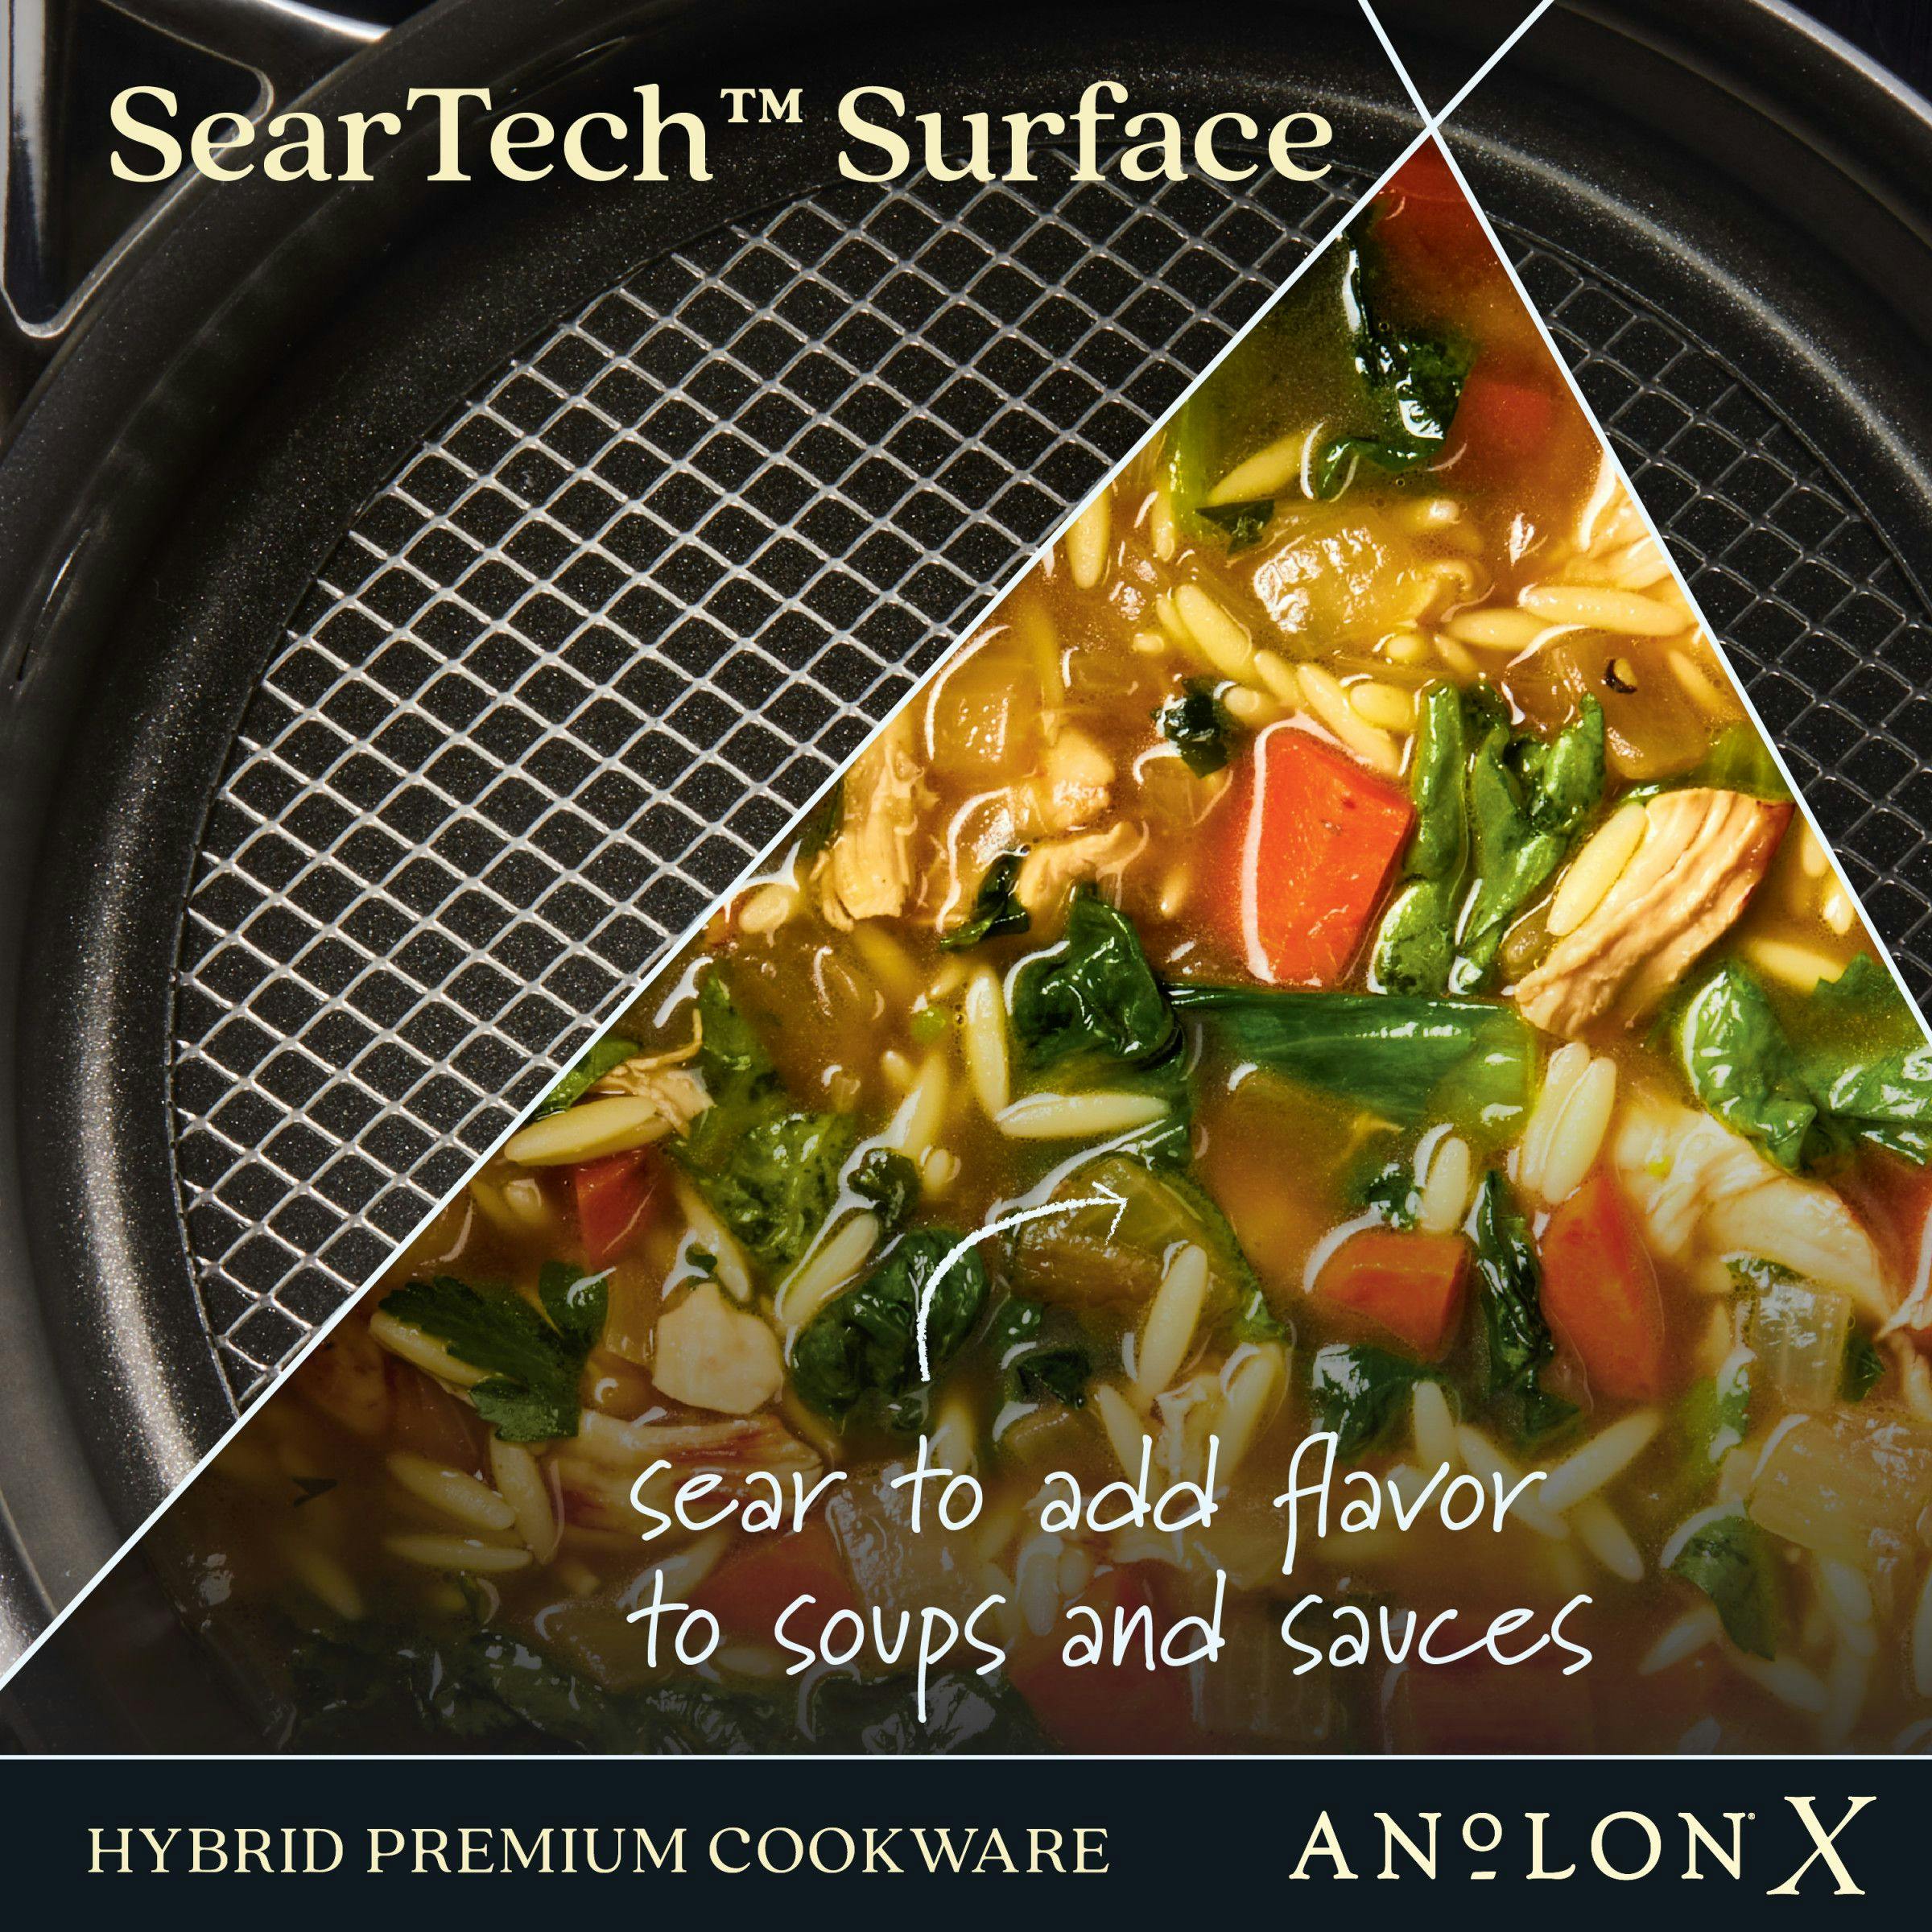 Anolon X Hybrid Nonstick Induction Saucepan With Lid, 3-Quart, Super Dark Gray